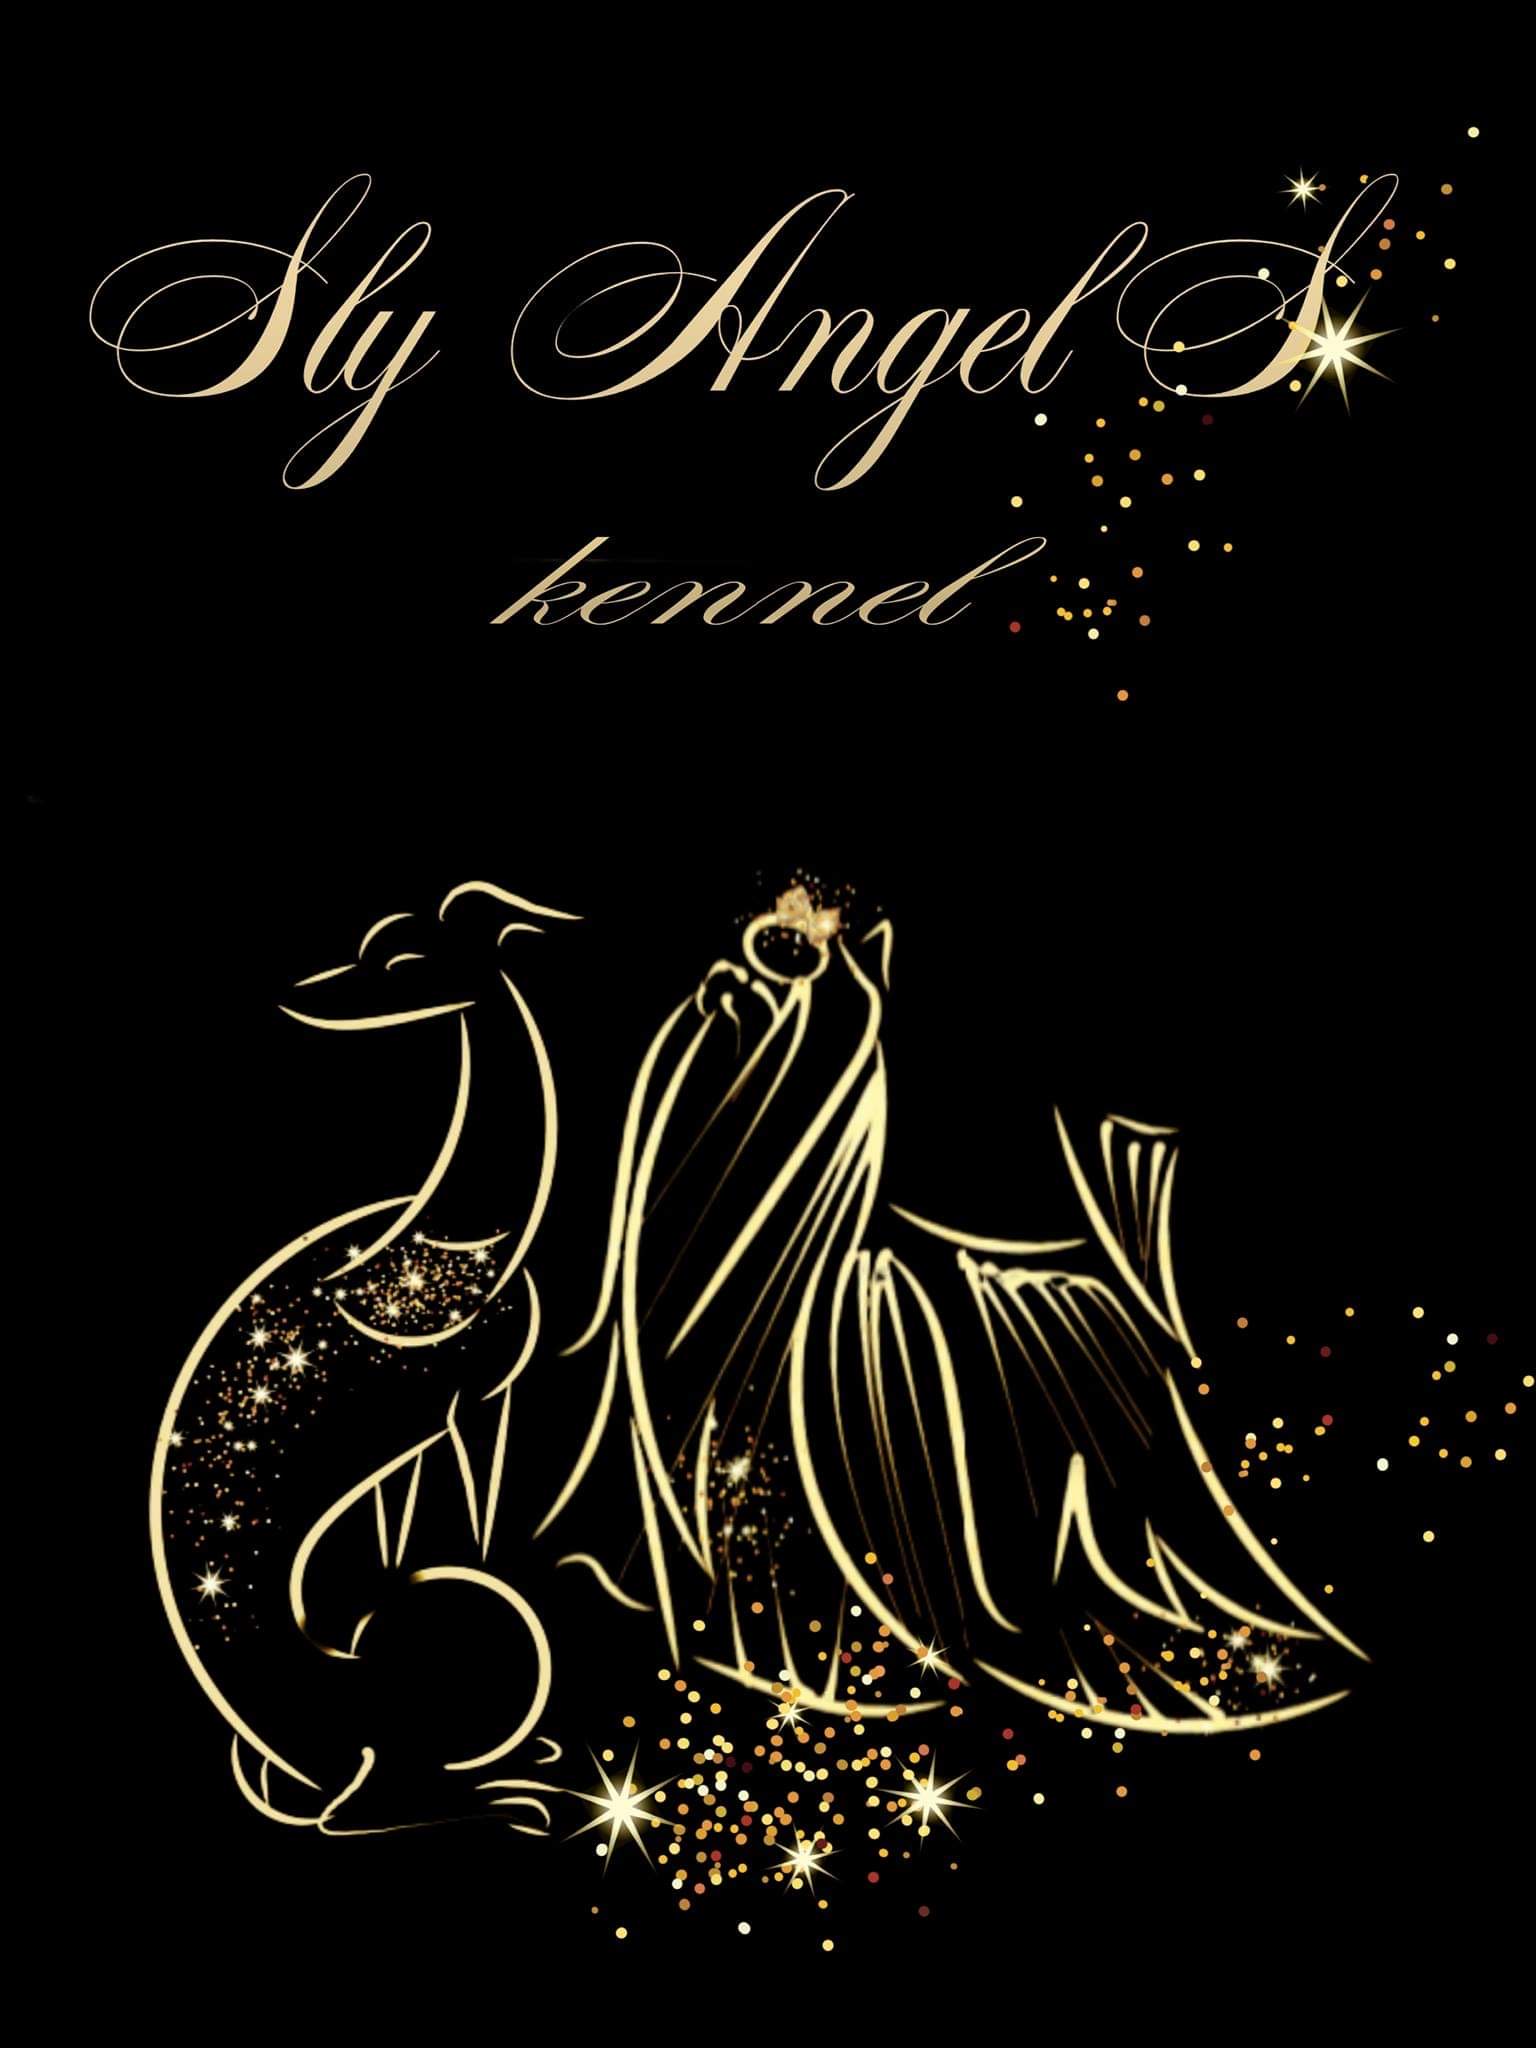 Sly AngelS — Labaza DogPedigree YorkshireTerrier